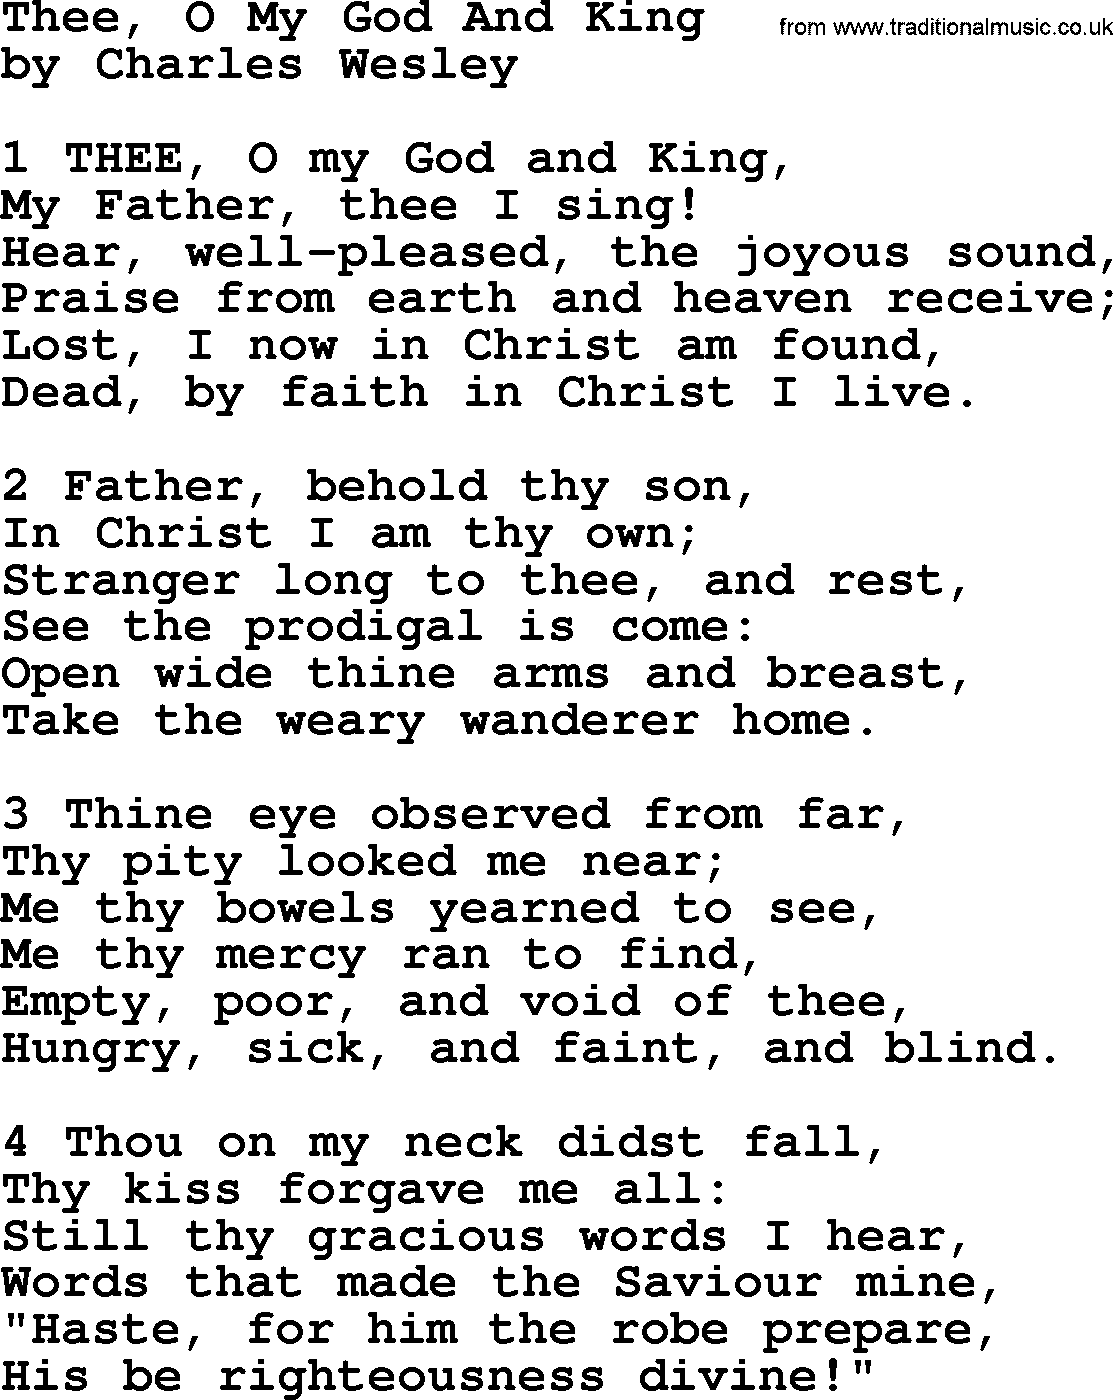 Charles Wesley hymn: Thee, O My God And King, lyrics